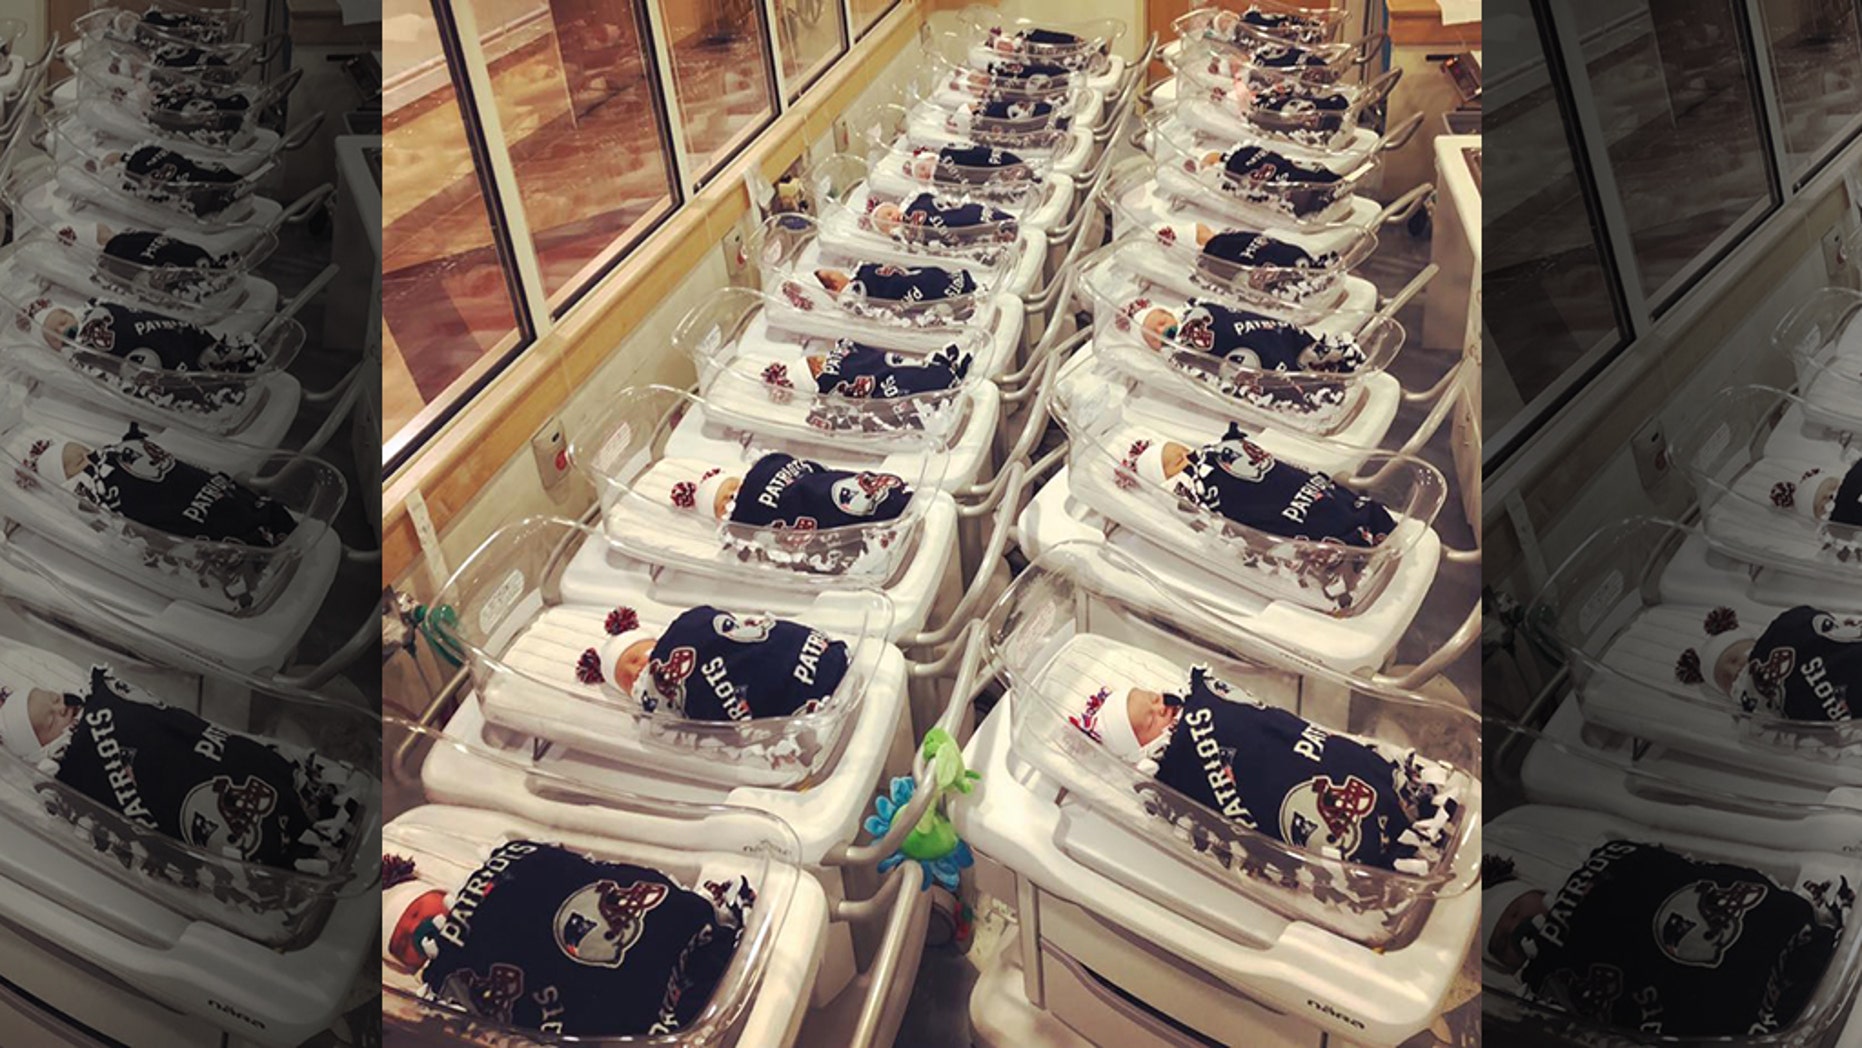 Baby-sized Patriots blankets, pom-pom hats given to newborns at Massachusetts hospital